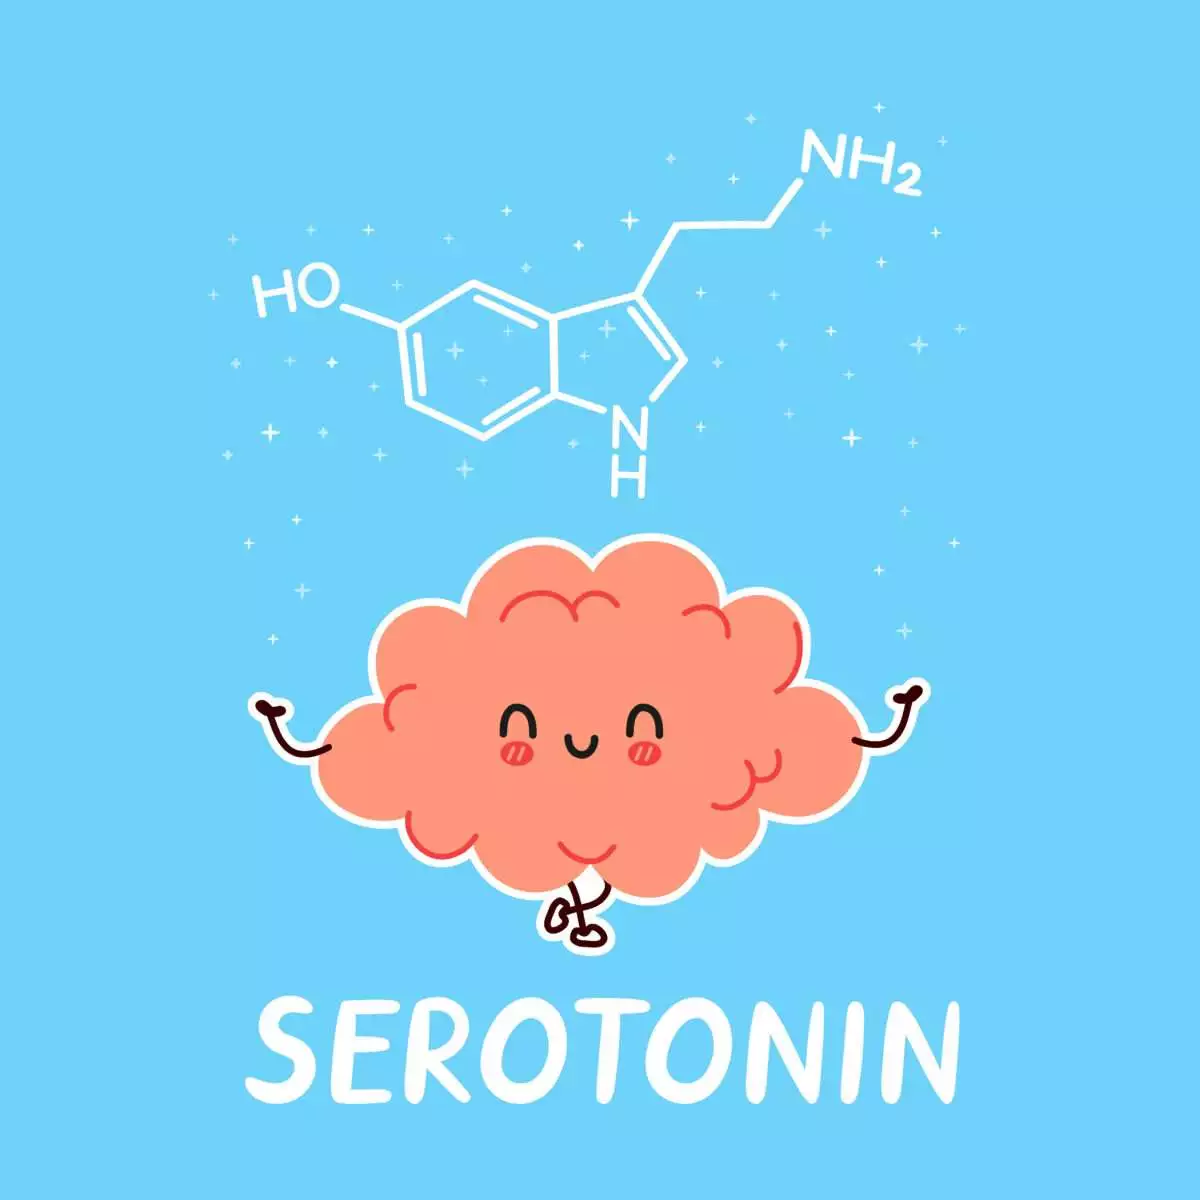 How to increase serotonin